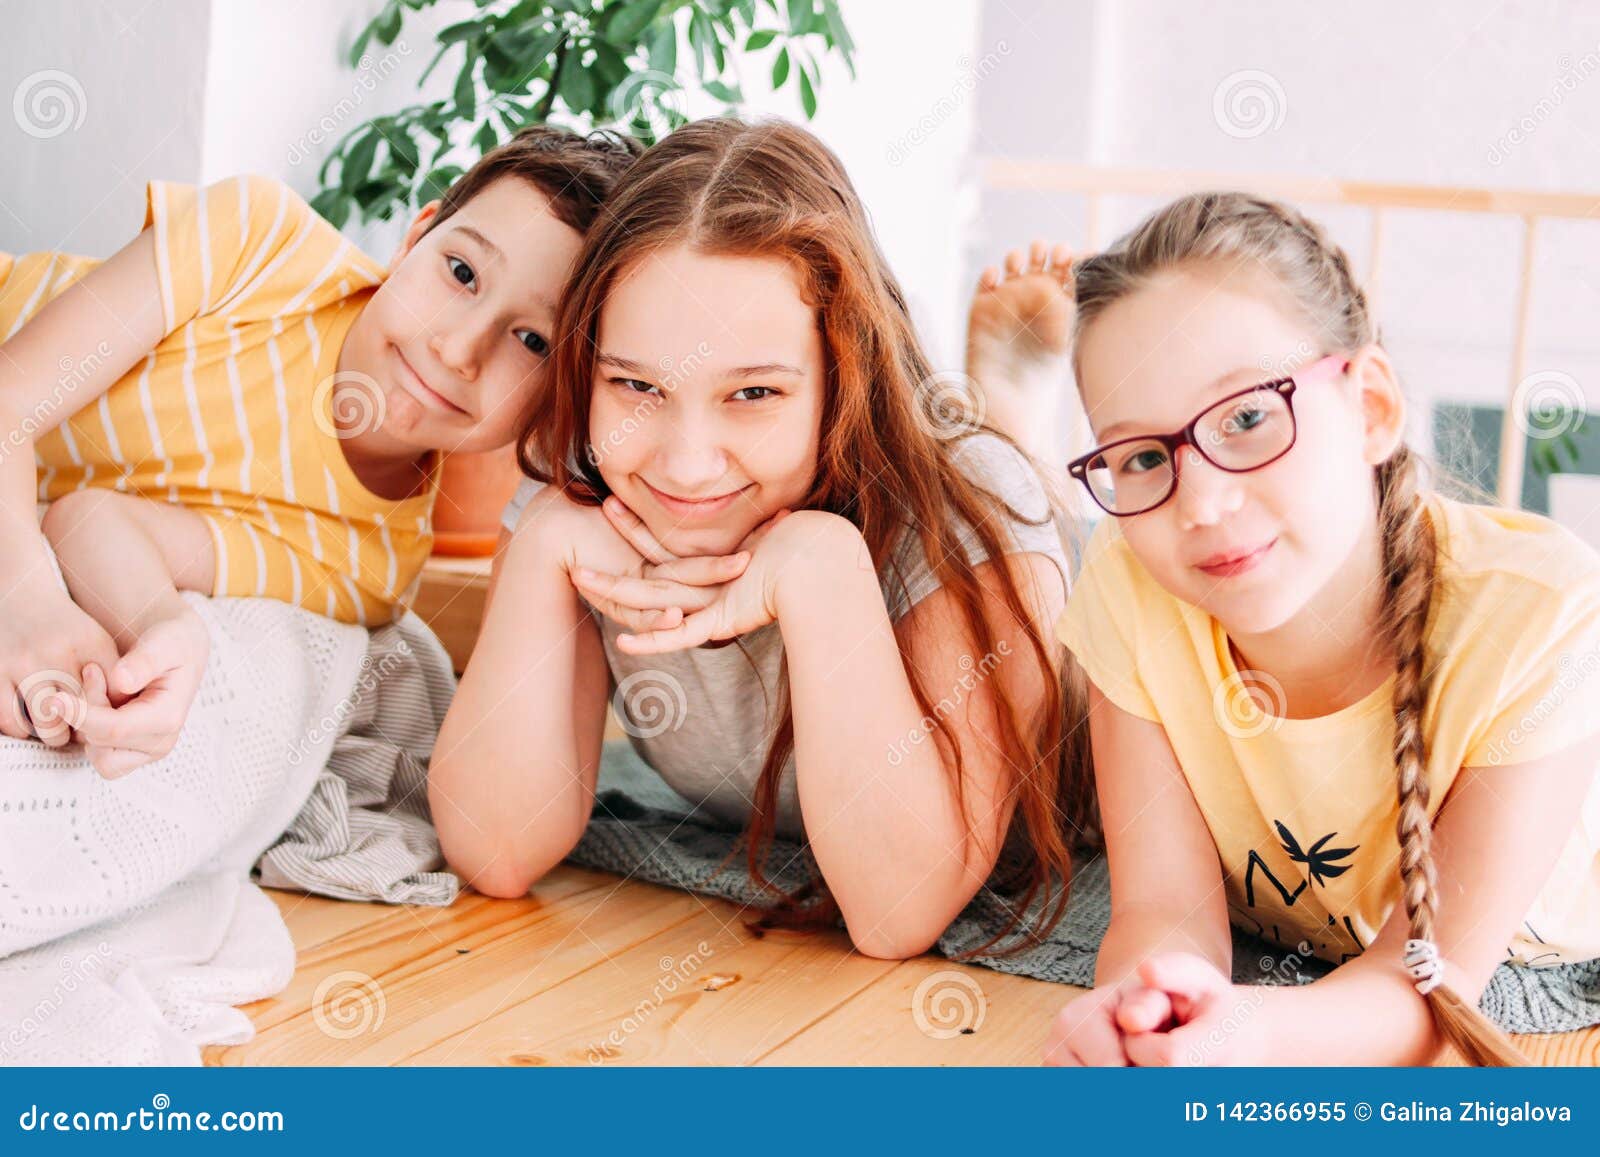 three cute smiling children friends tweens lying on the floor